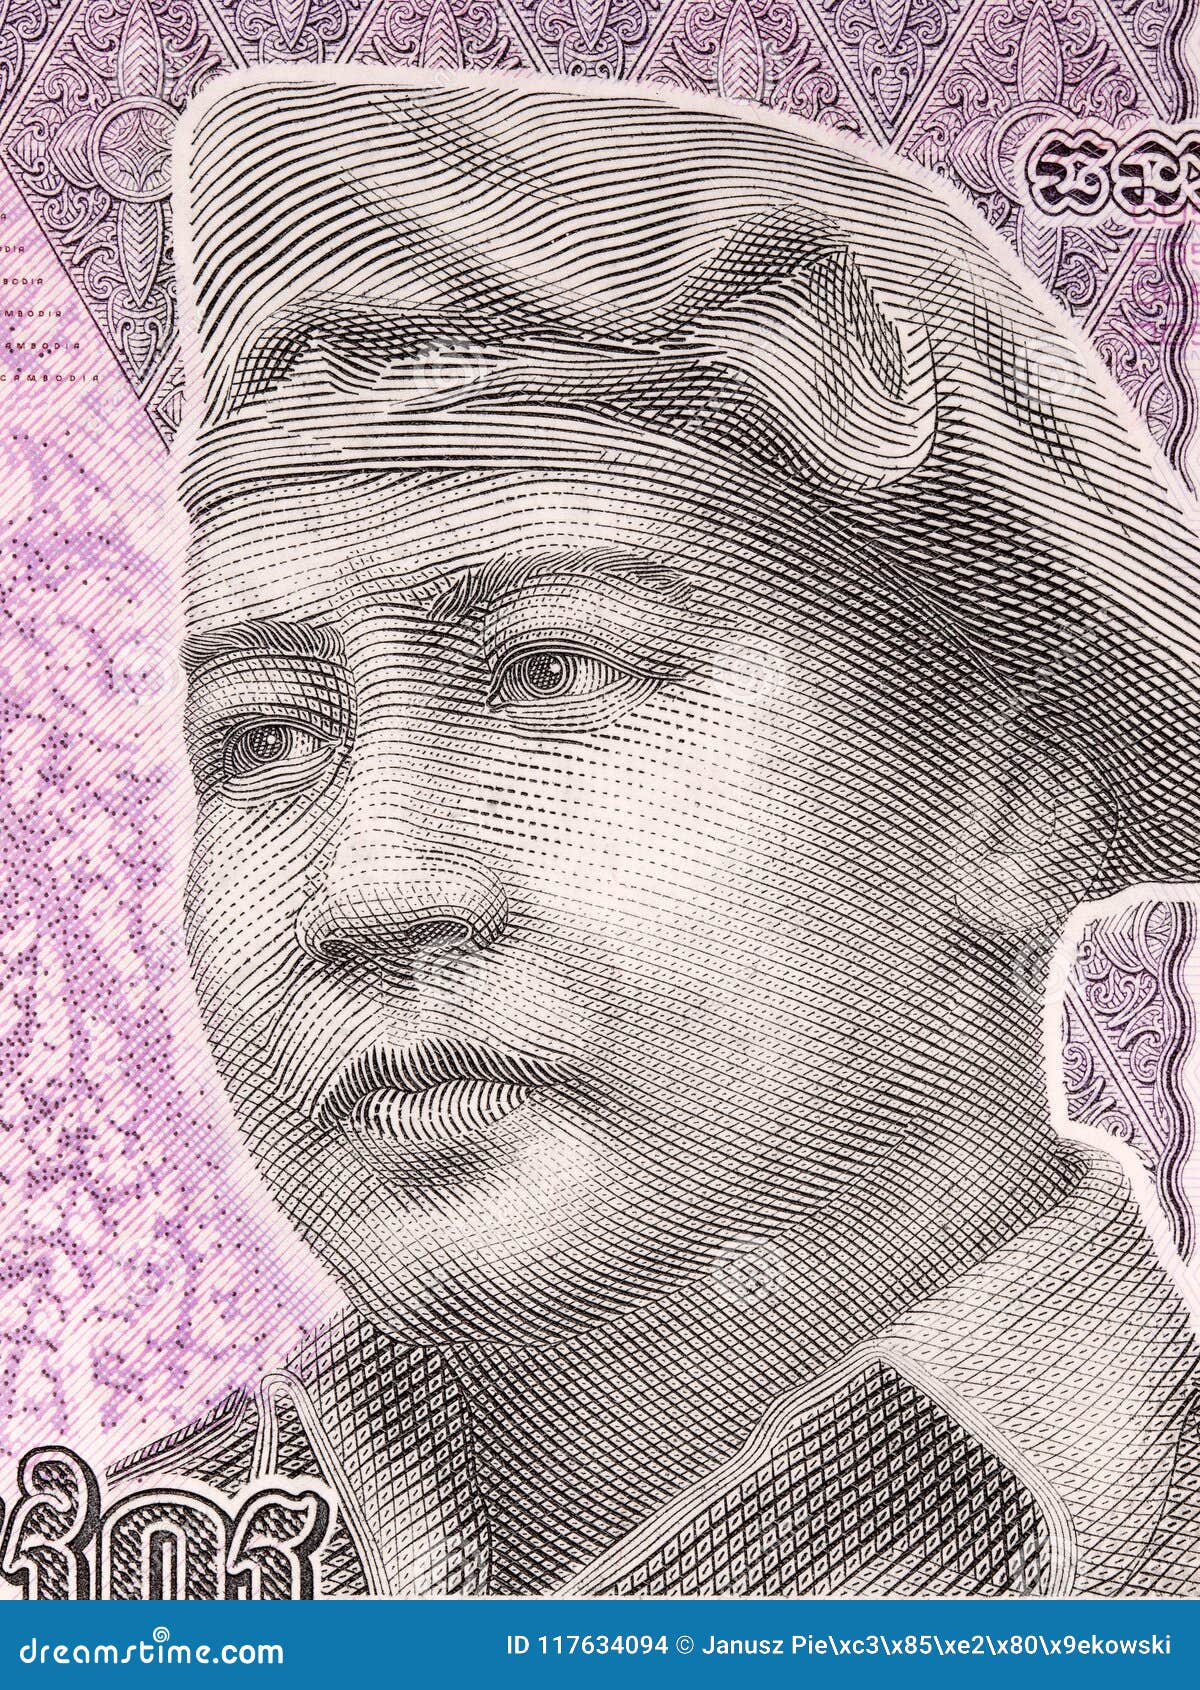 king norodom sihanouk, a portrait